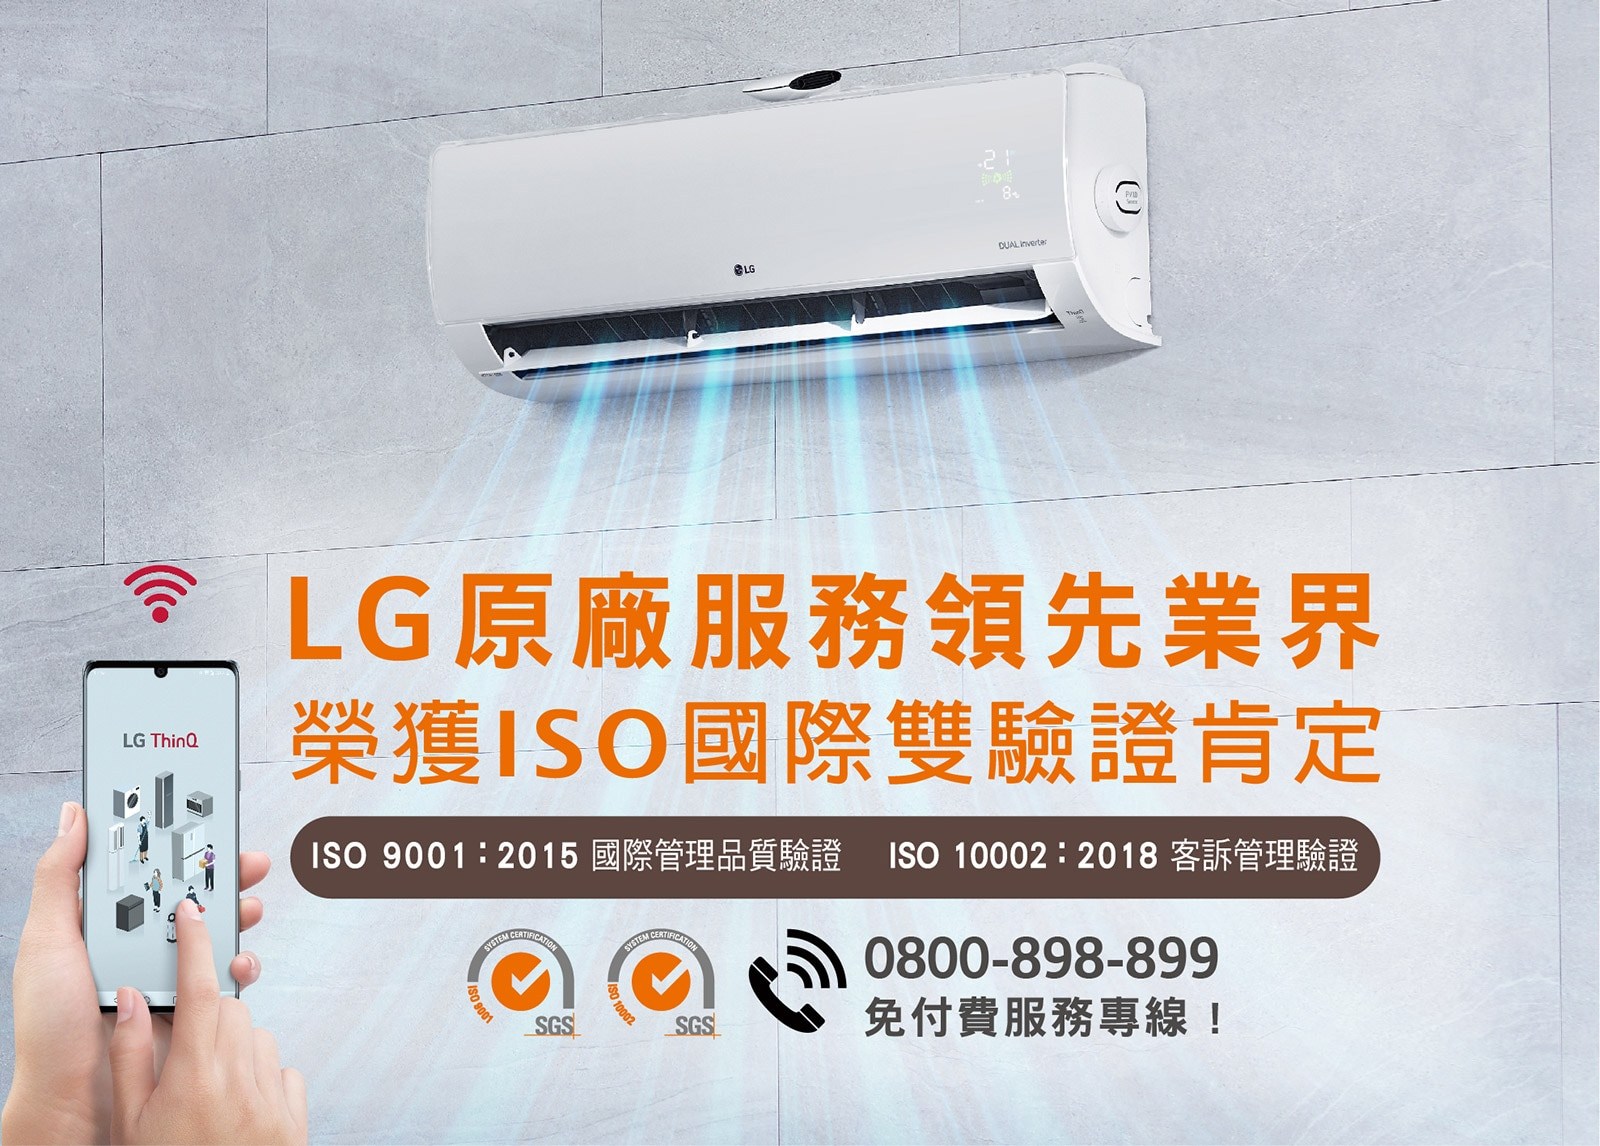 LG 原廠服務榮獲 ISO 國際雙驗證肯定1